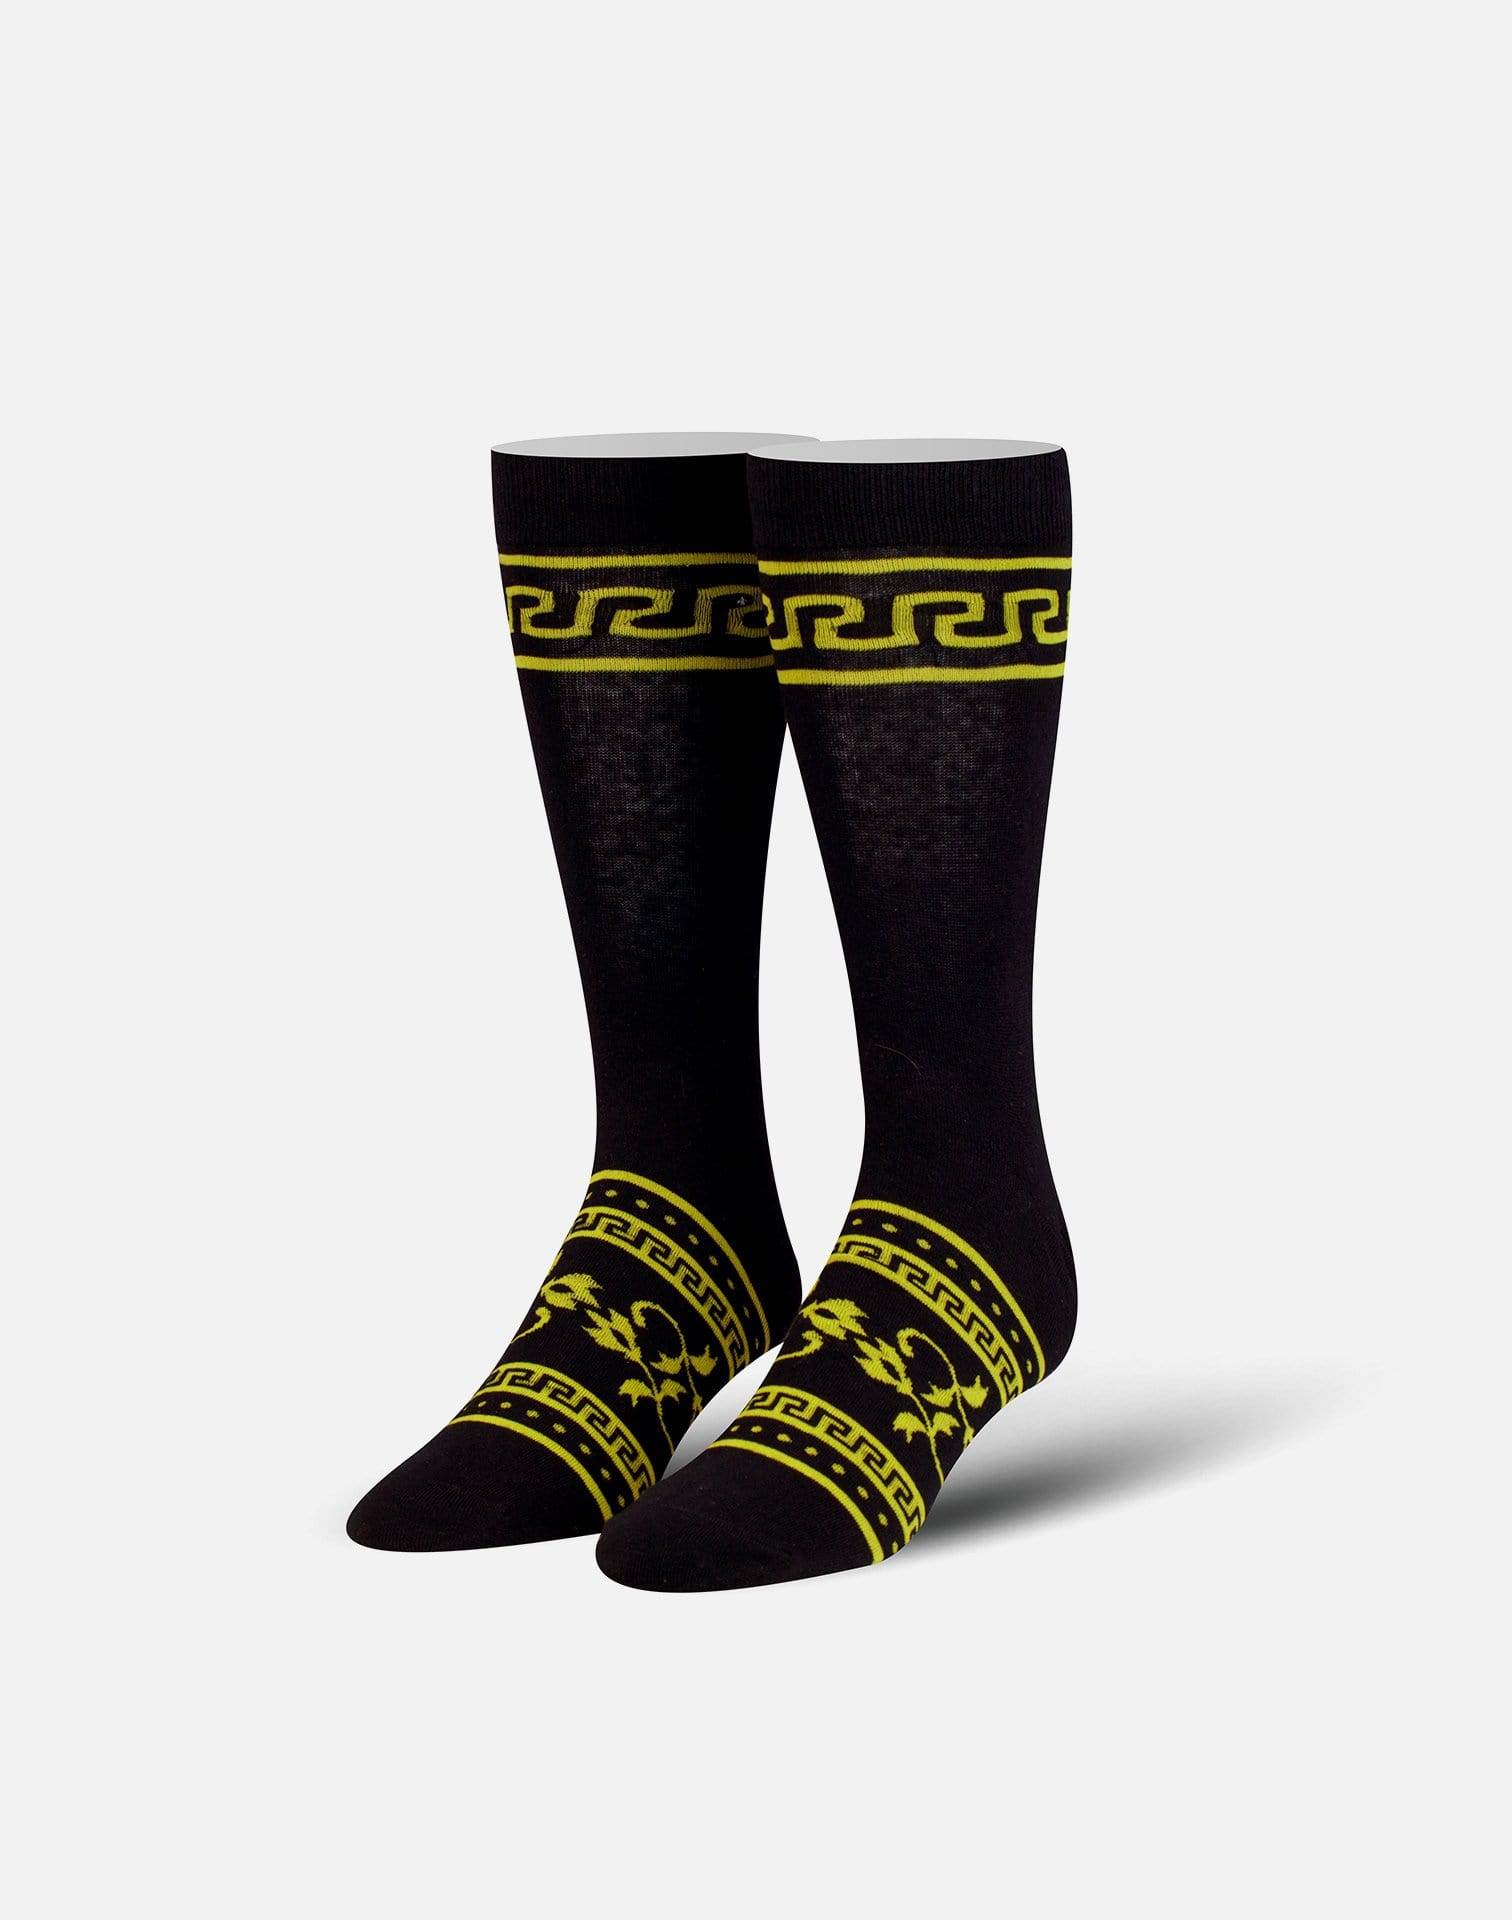 Odd Sox Rome Socks